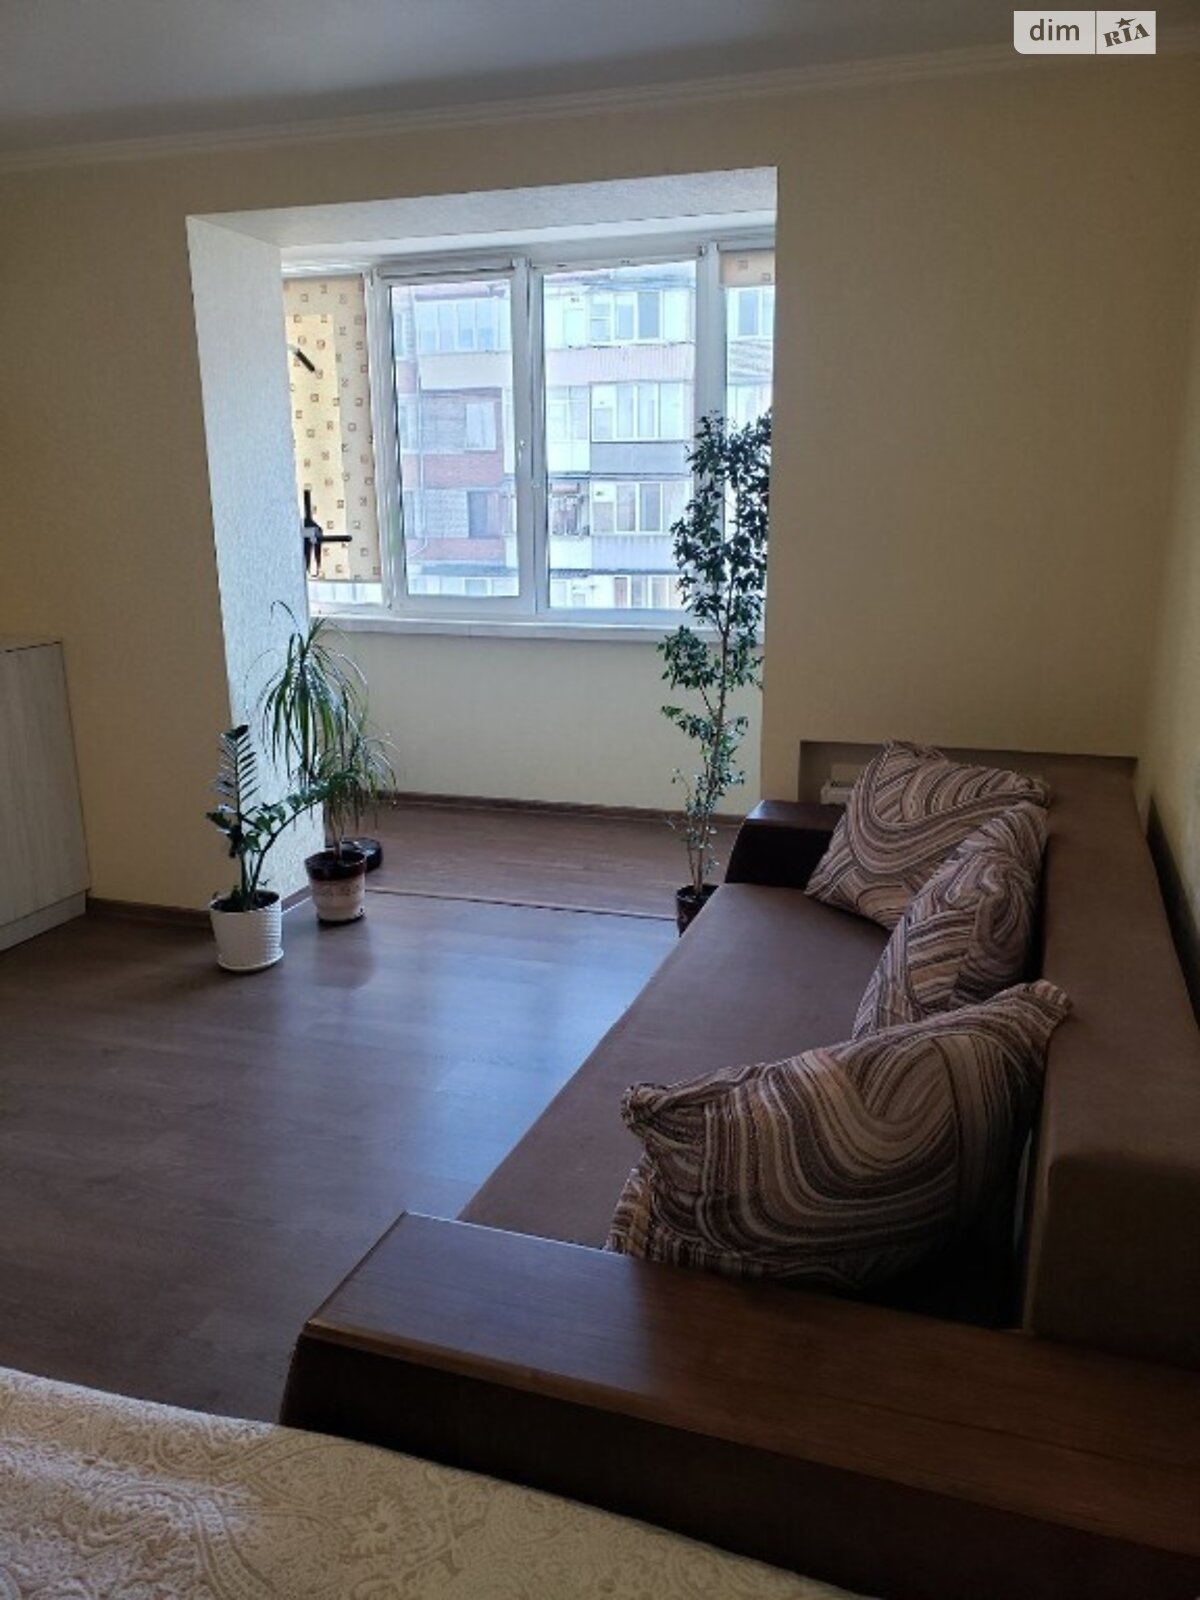 Продаж двокімнатної квартири в Хмельницькому, на просп. Миру, район Виставка фото 1